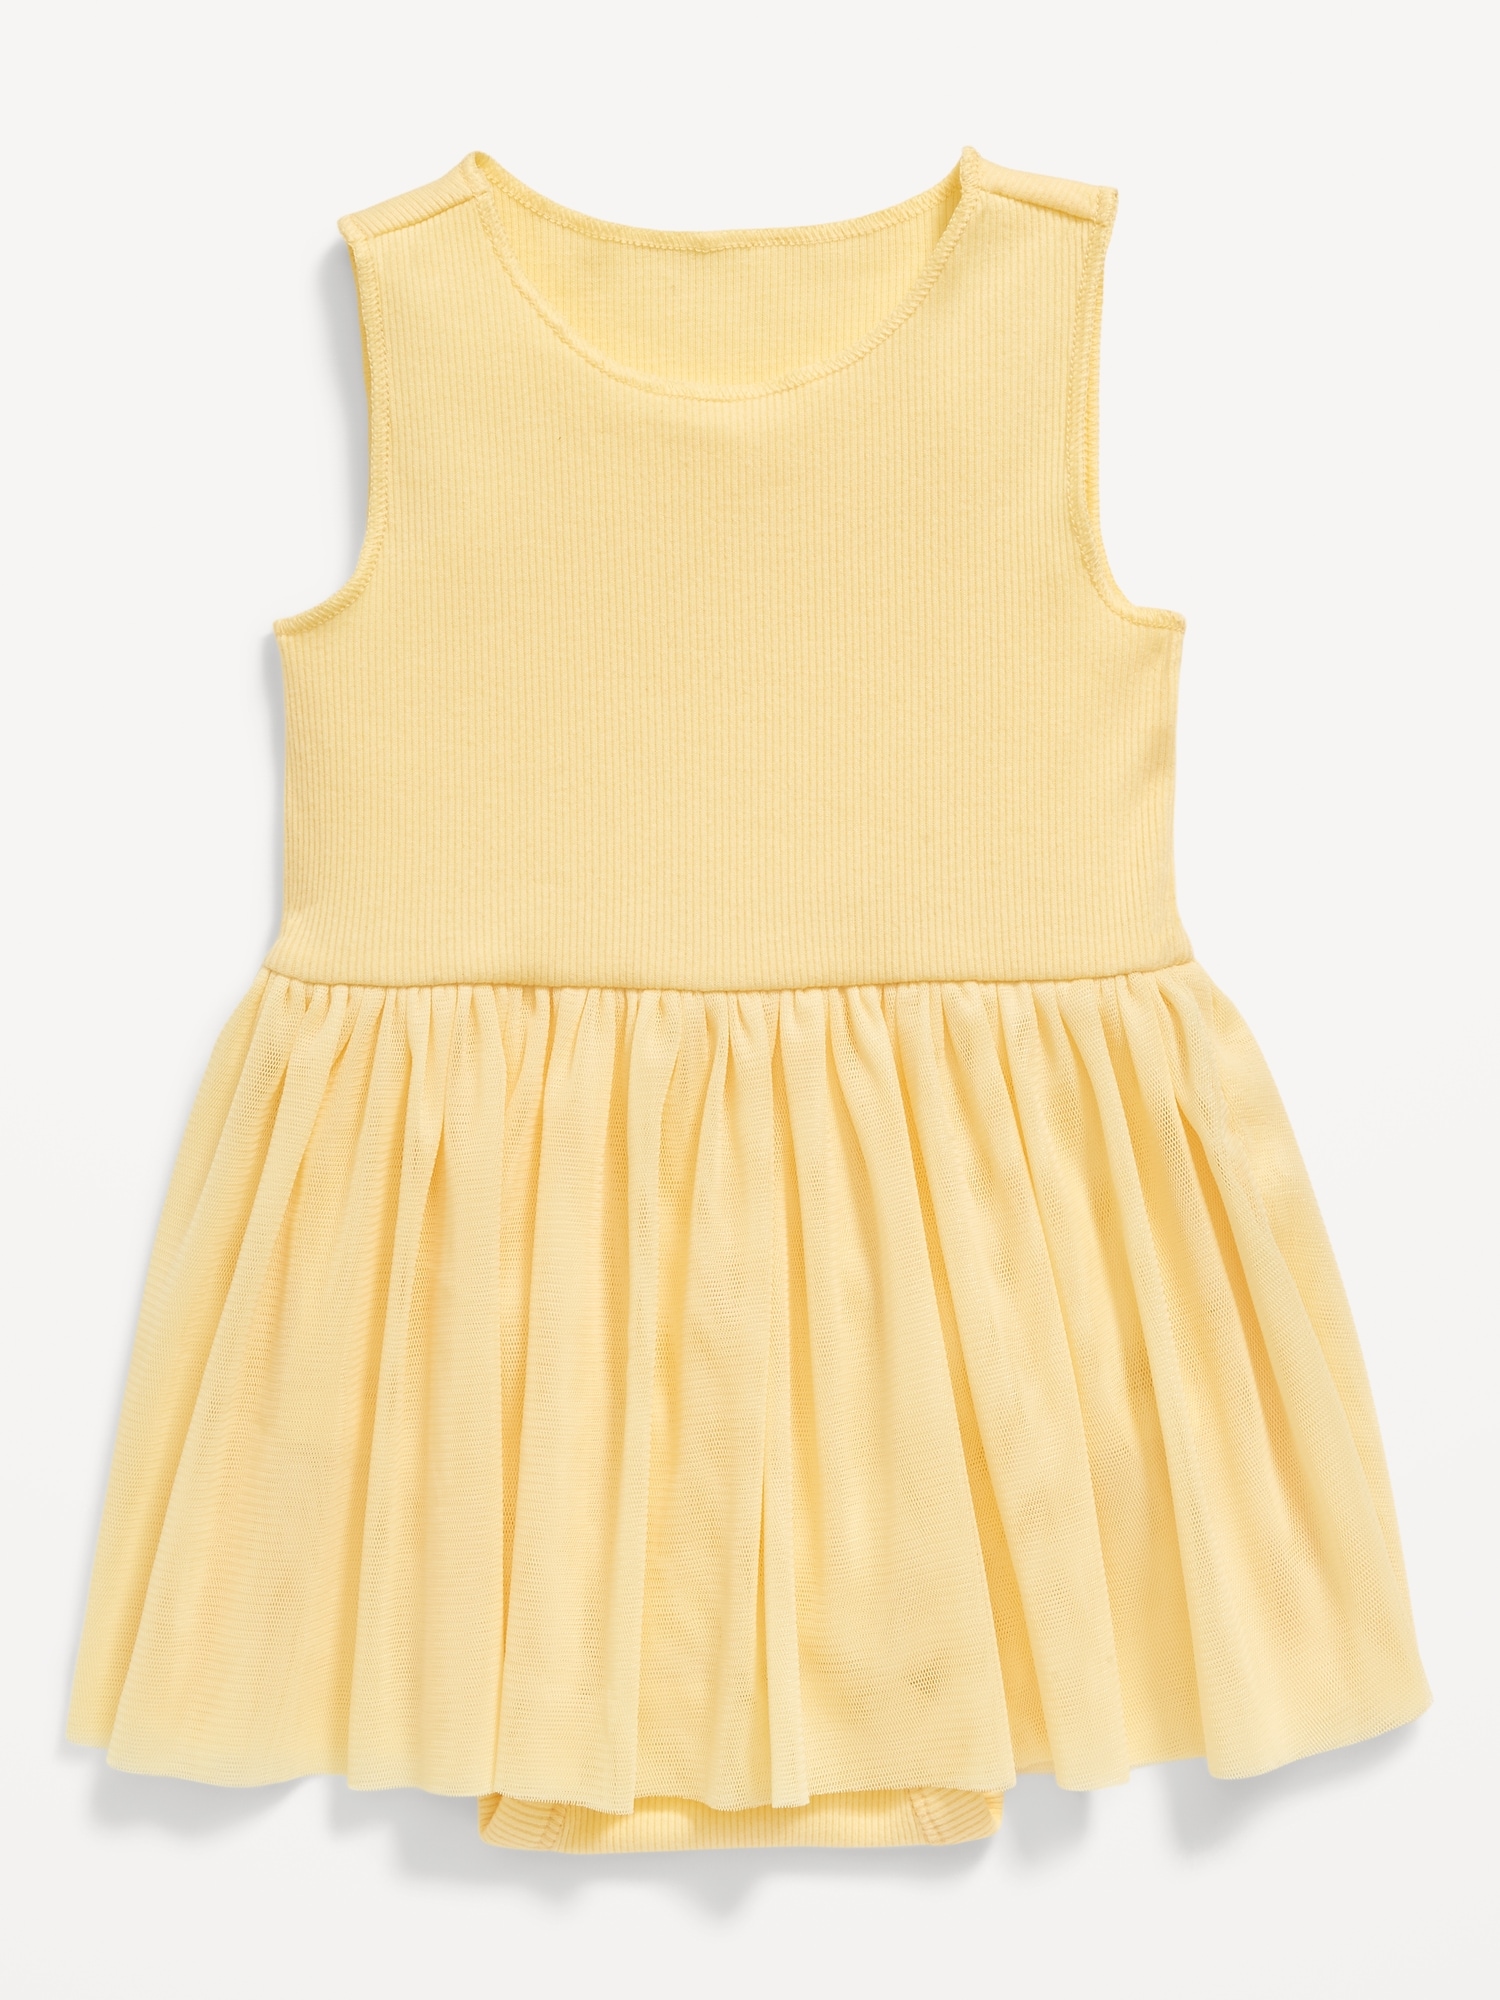 Sleeveless Rib-Knit Bodysuit Tutu Dress for Baby Hot Deal